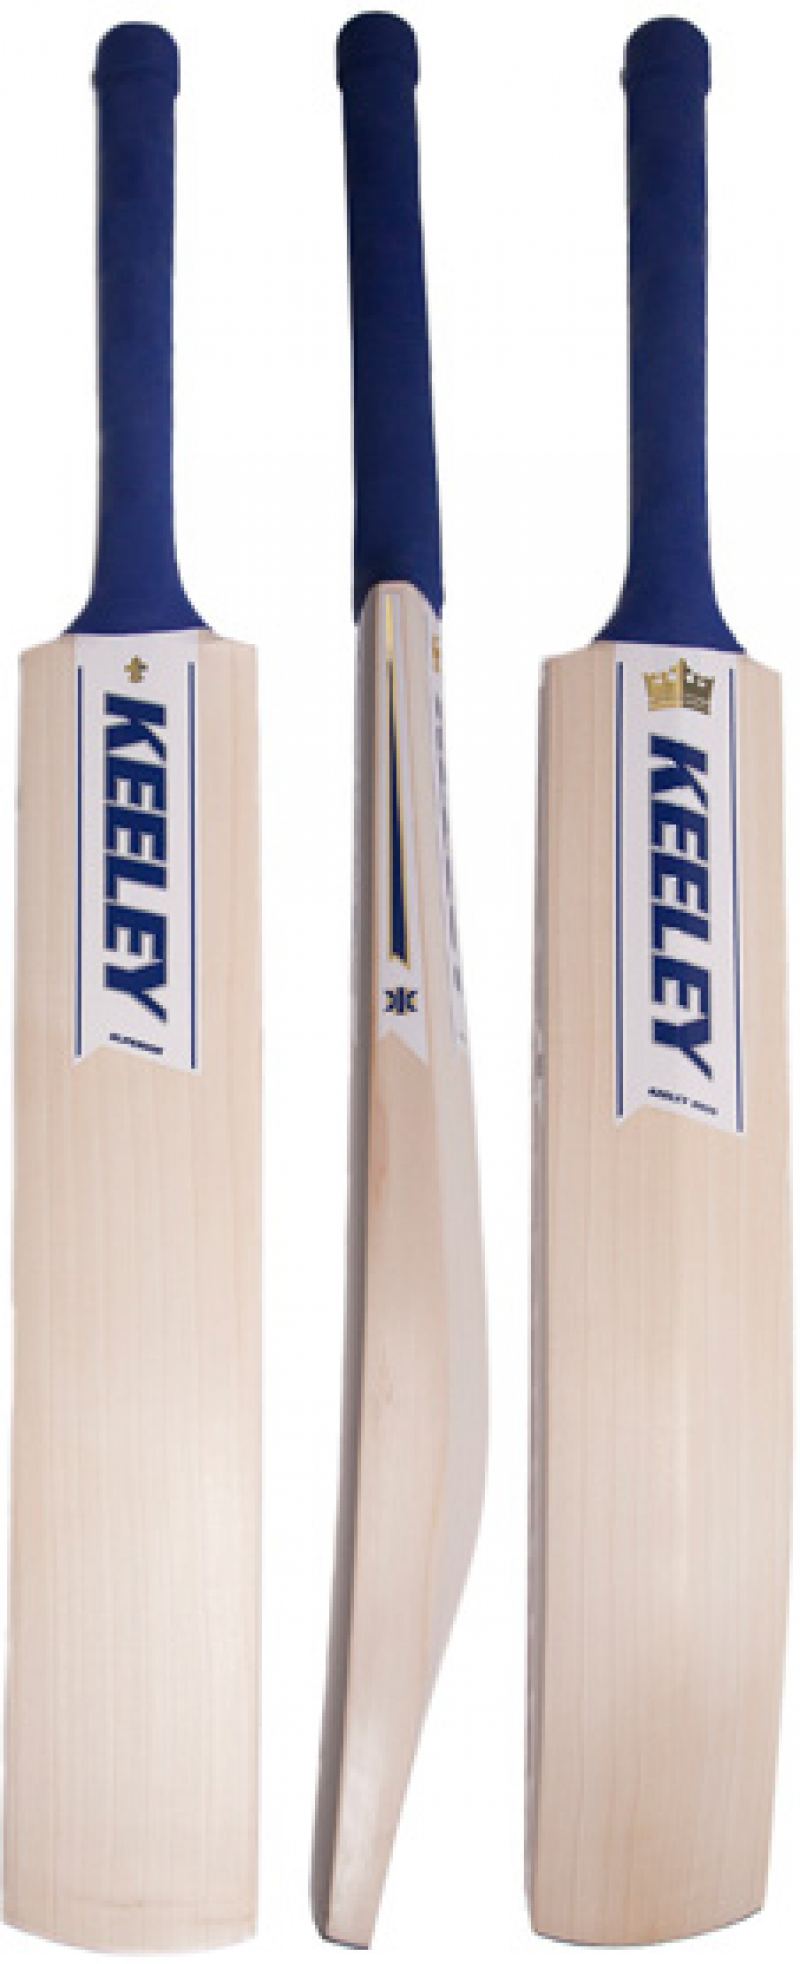 Keeley Superior Grade 2 Cricket Bat